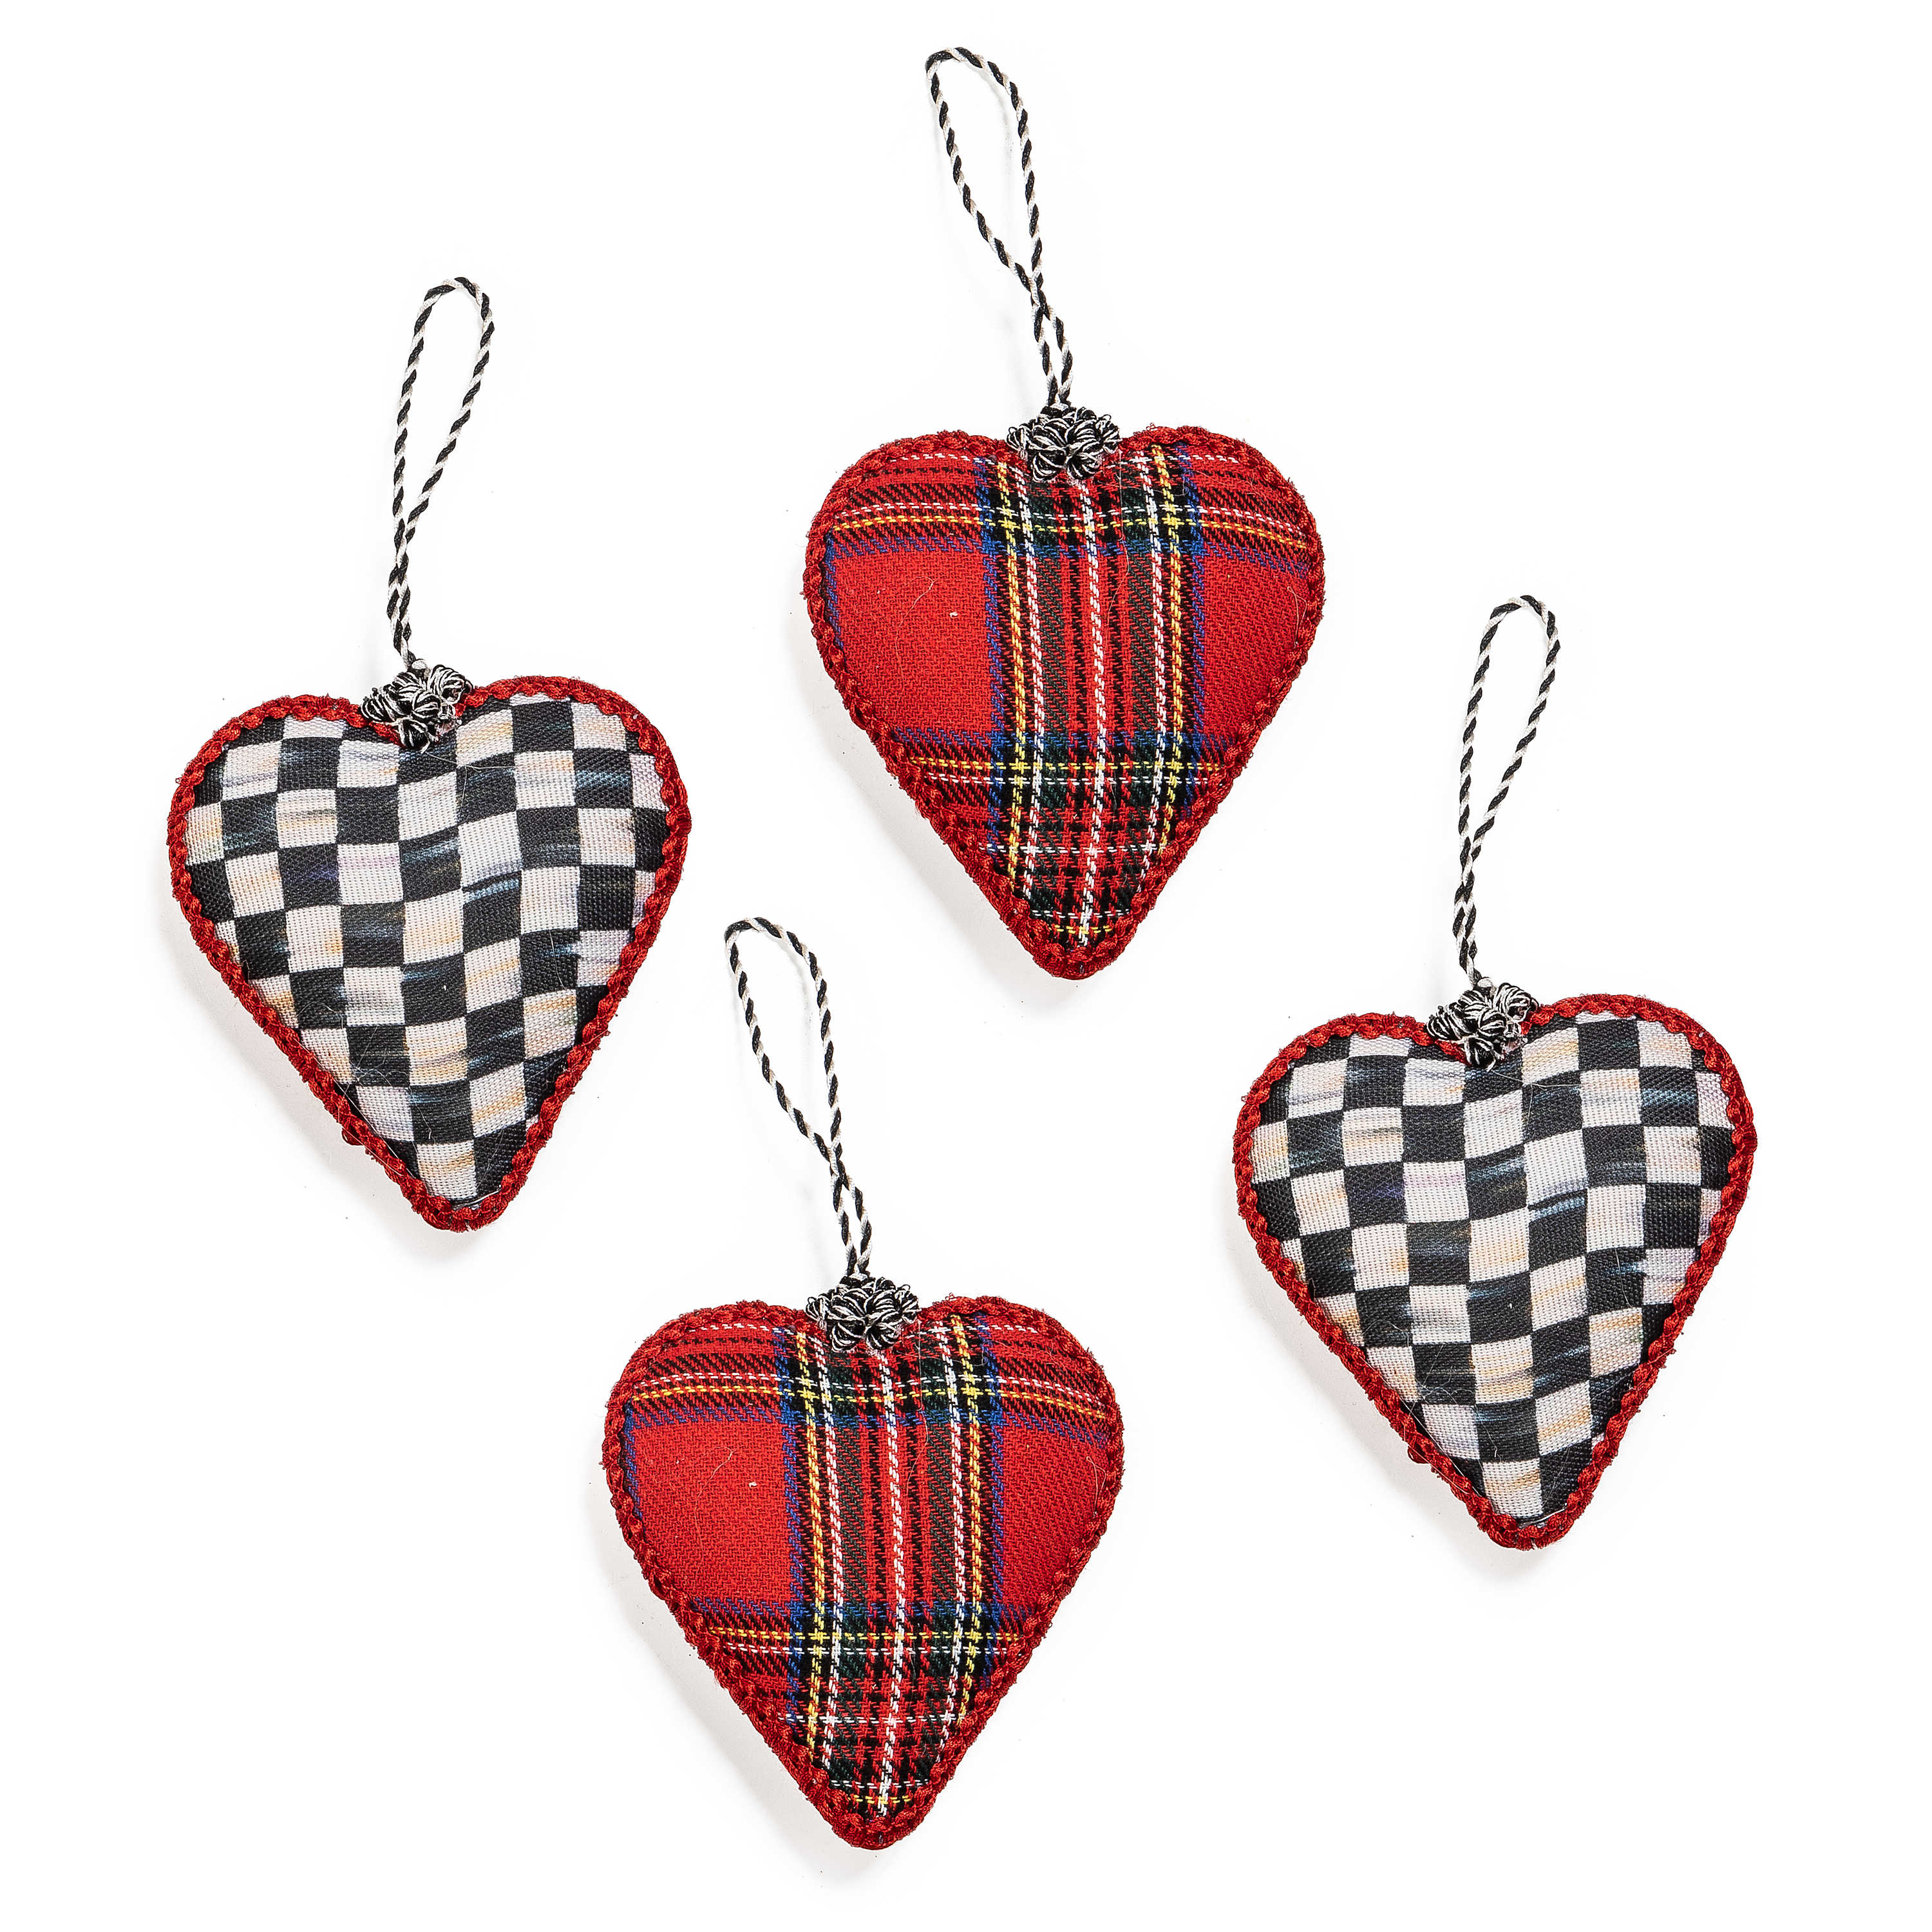 Tartastic Heart Ornaments, Set of 4 mackenzie-childs Panama 0